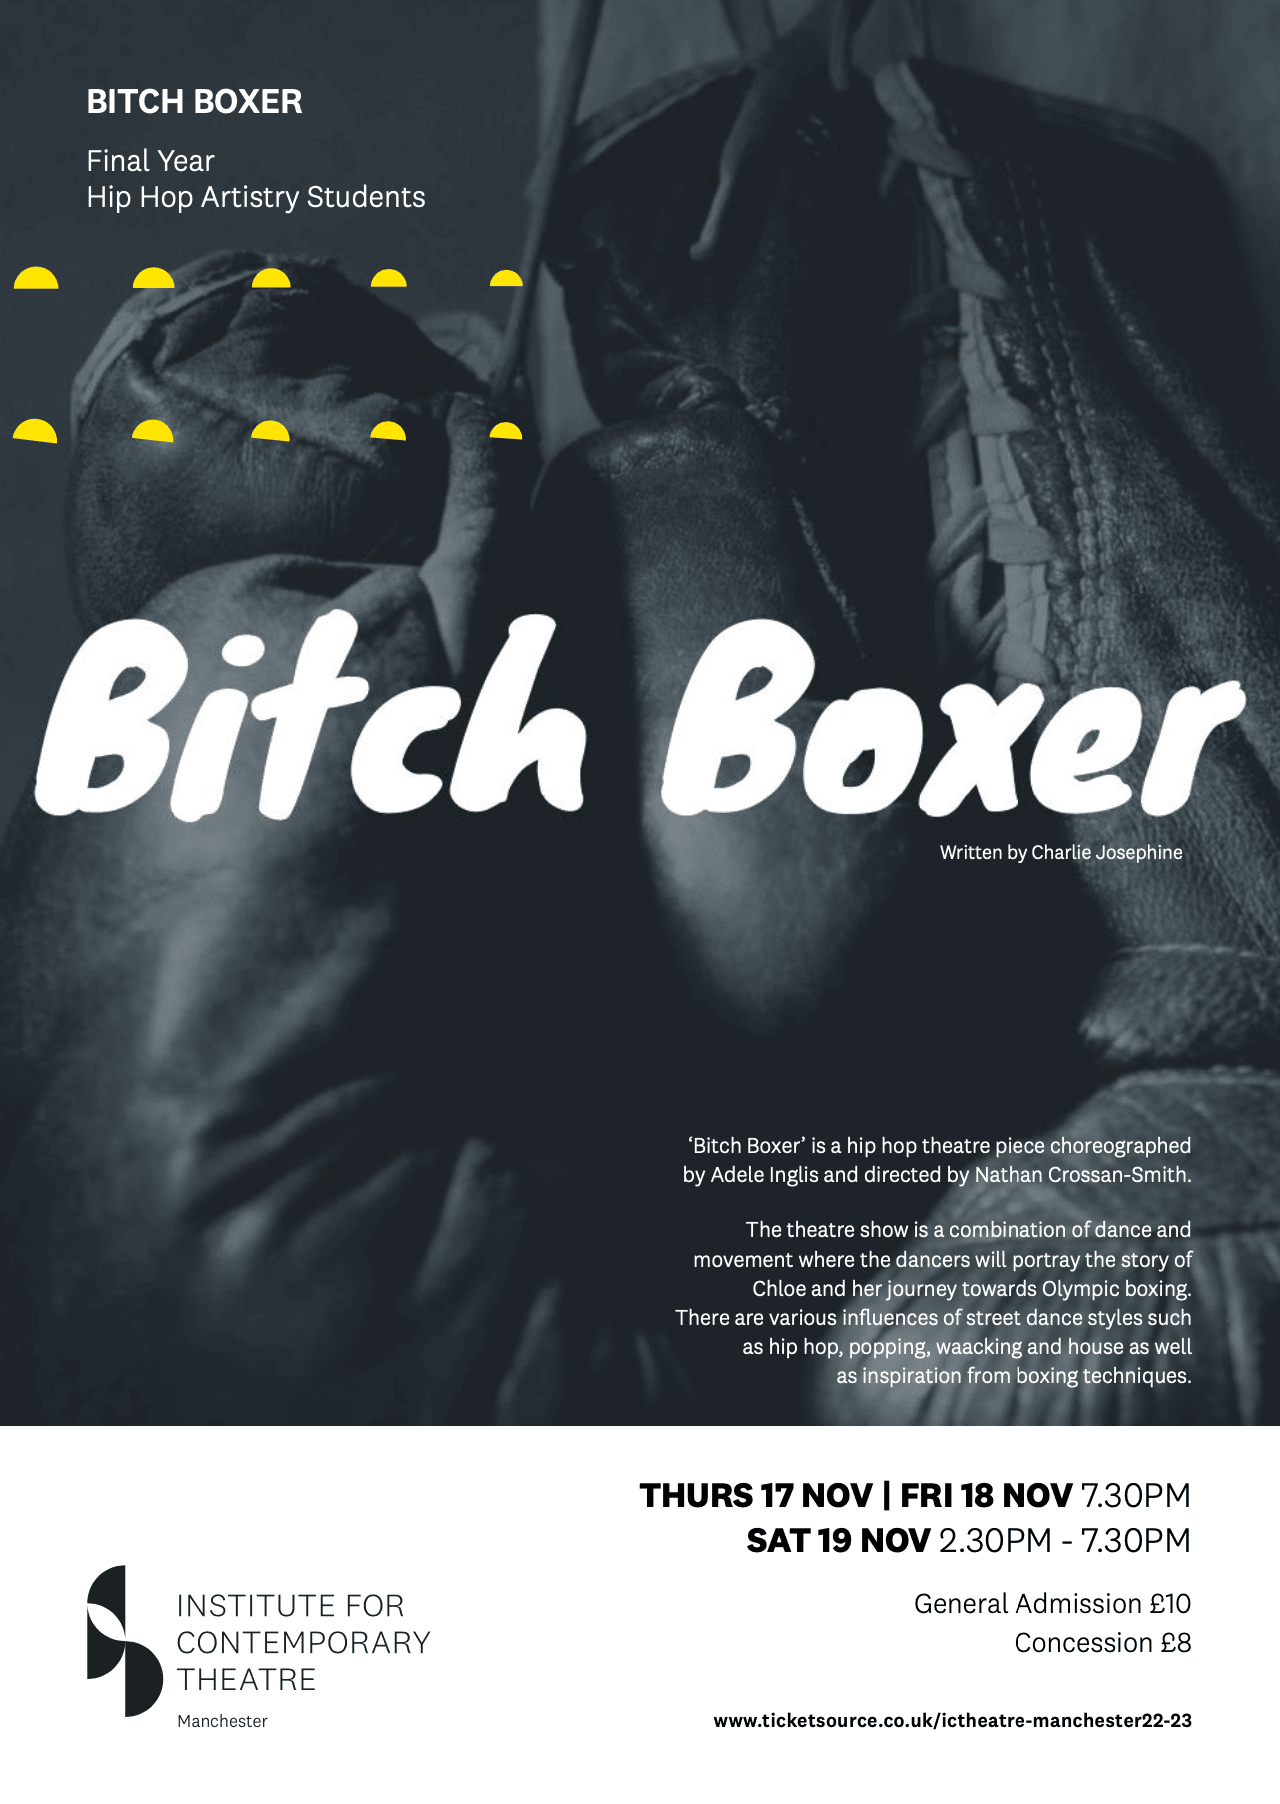 Bitch Boxer poster - The Institute for Contemporary Theatre